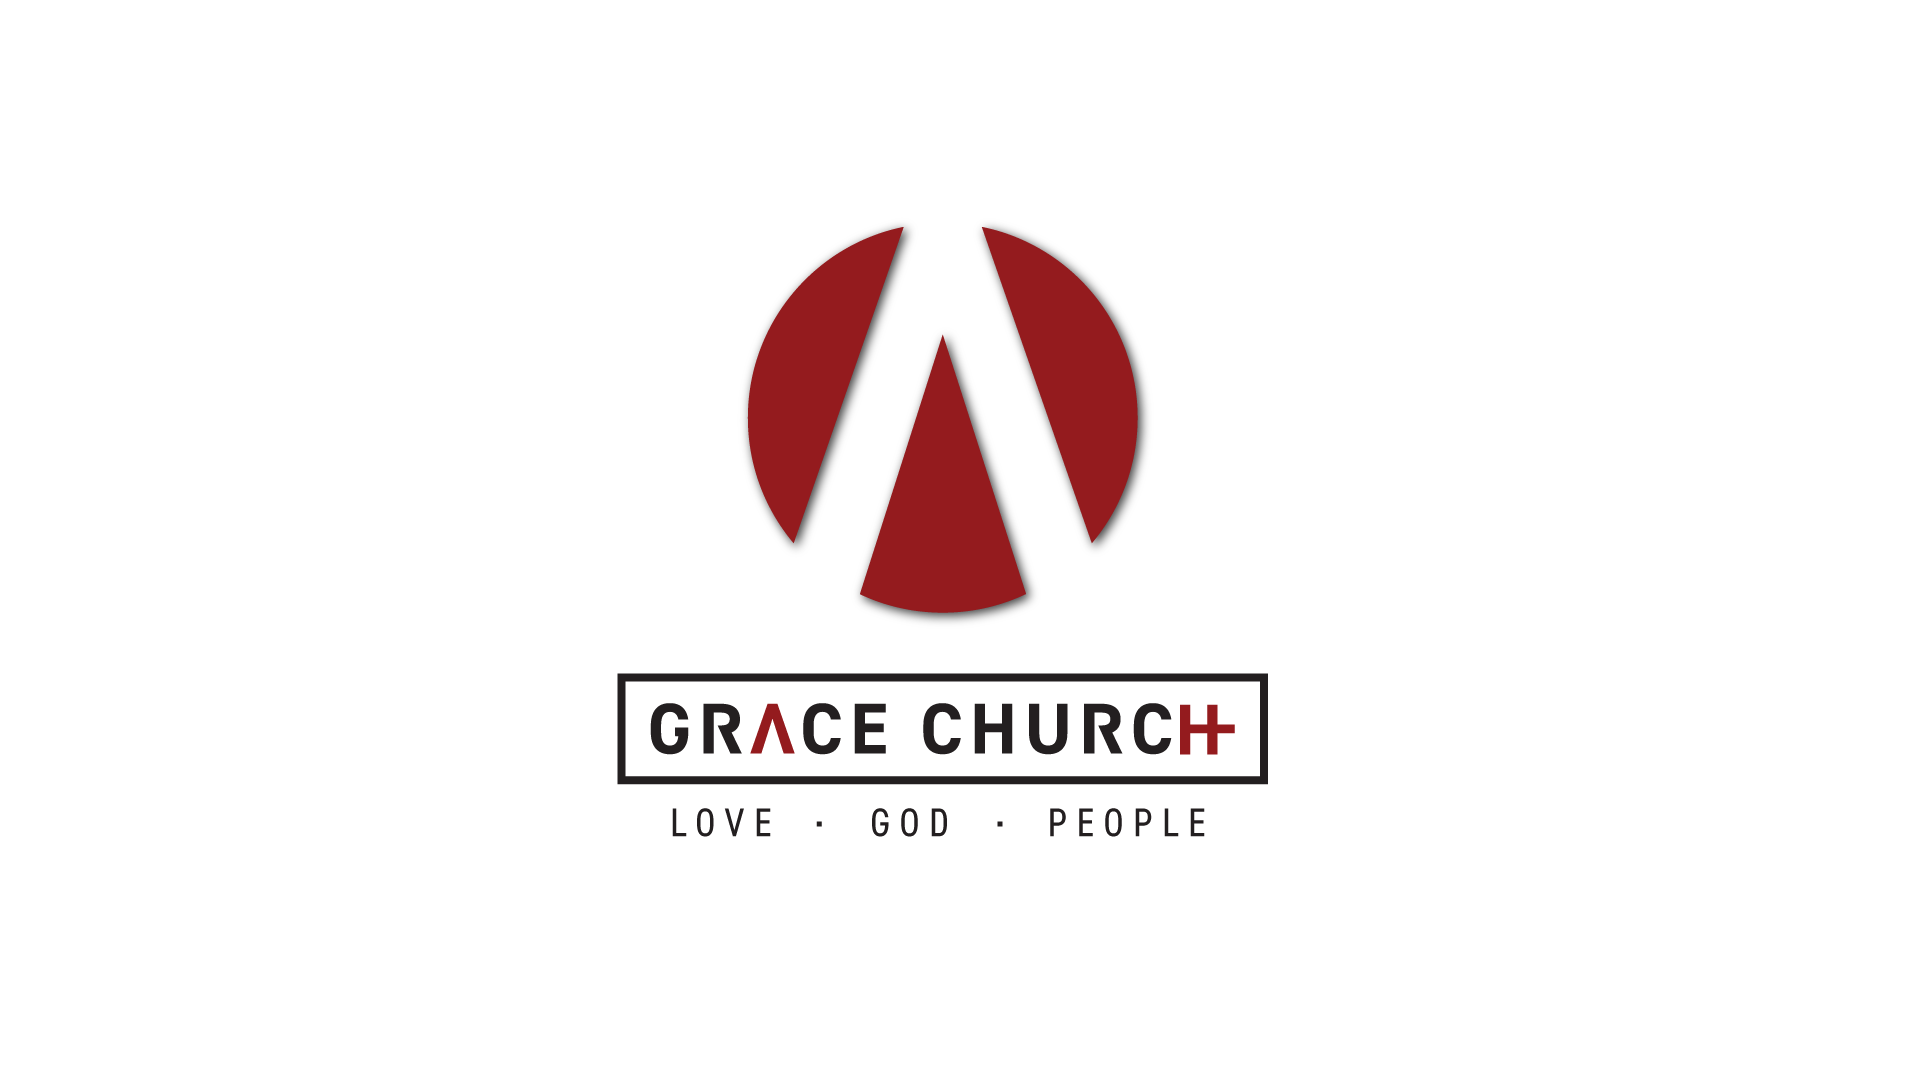 Grace Church. Love. God. People